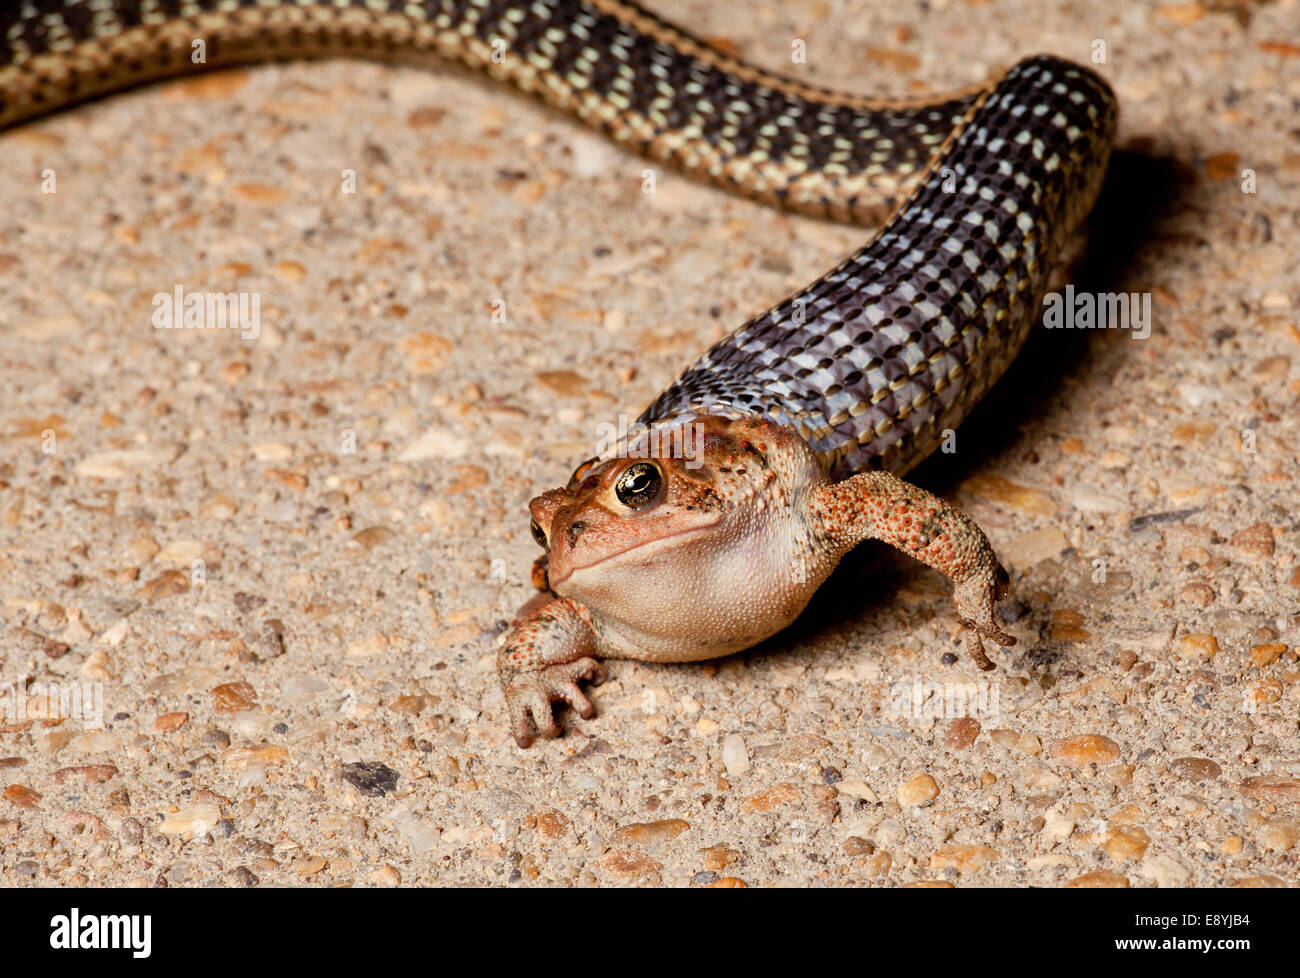 Gartner snake swallowing toad Stock Photo